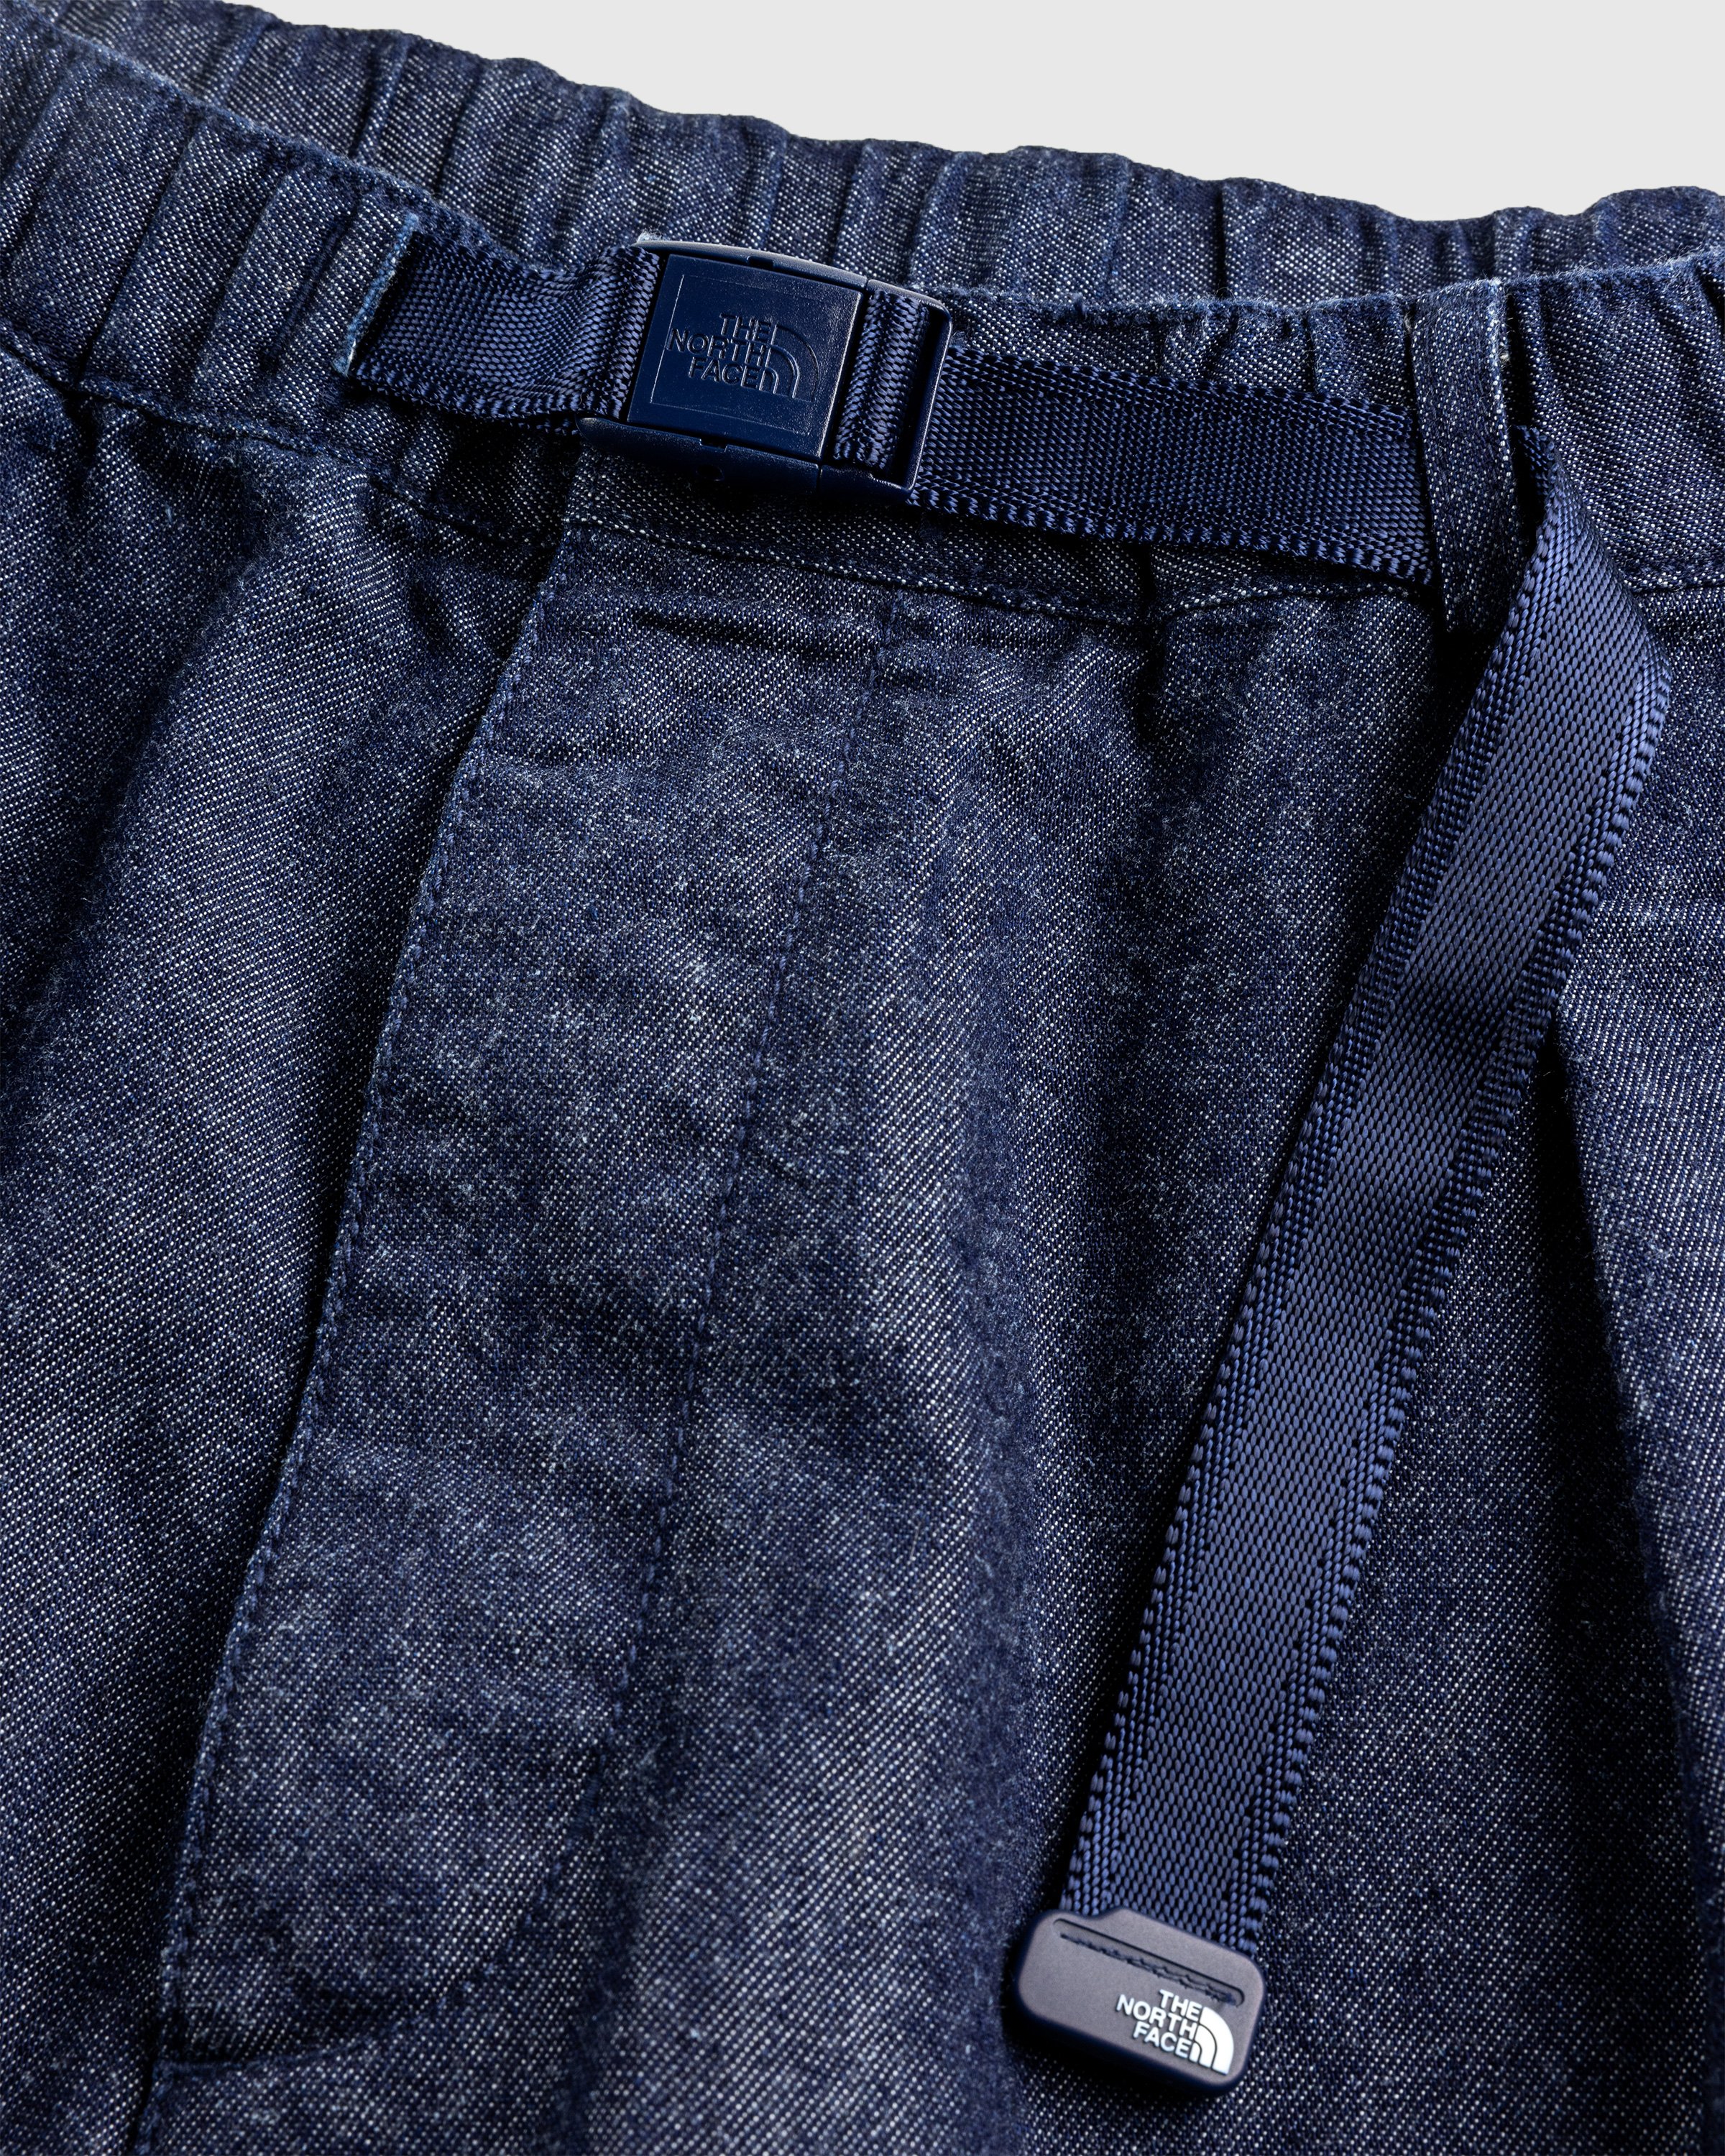 The North Face - M DENIM CASUAL PANTS - AP LIGHT INDIGO DENIM WASH - Clothing - Blue - Image 6